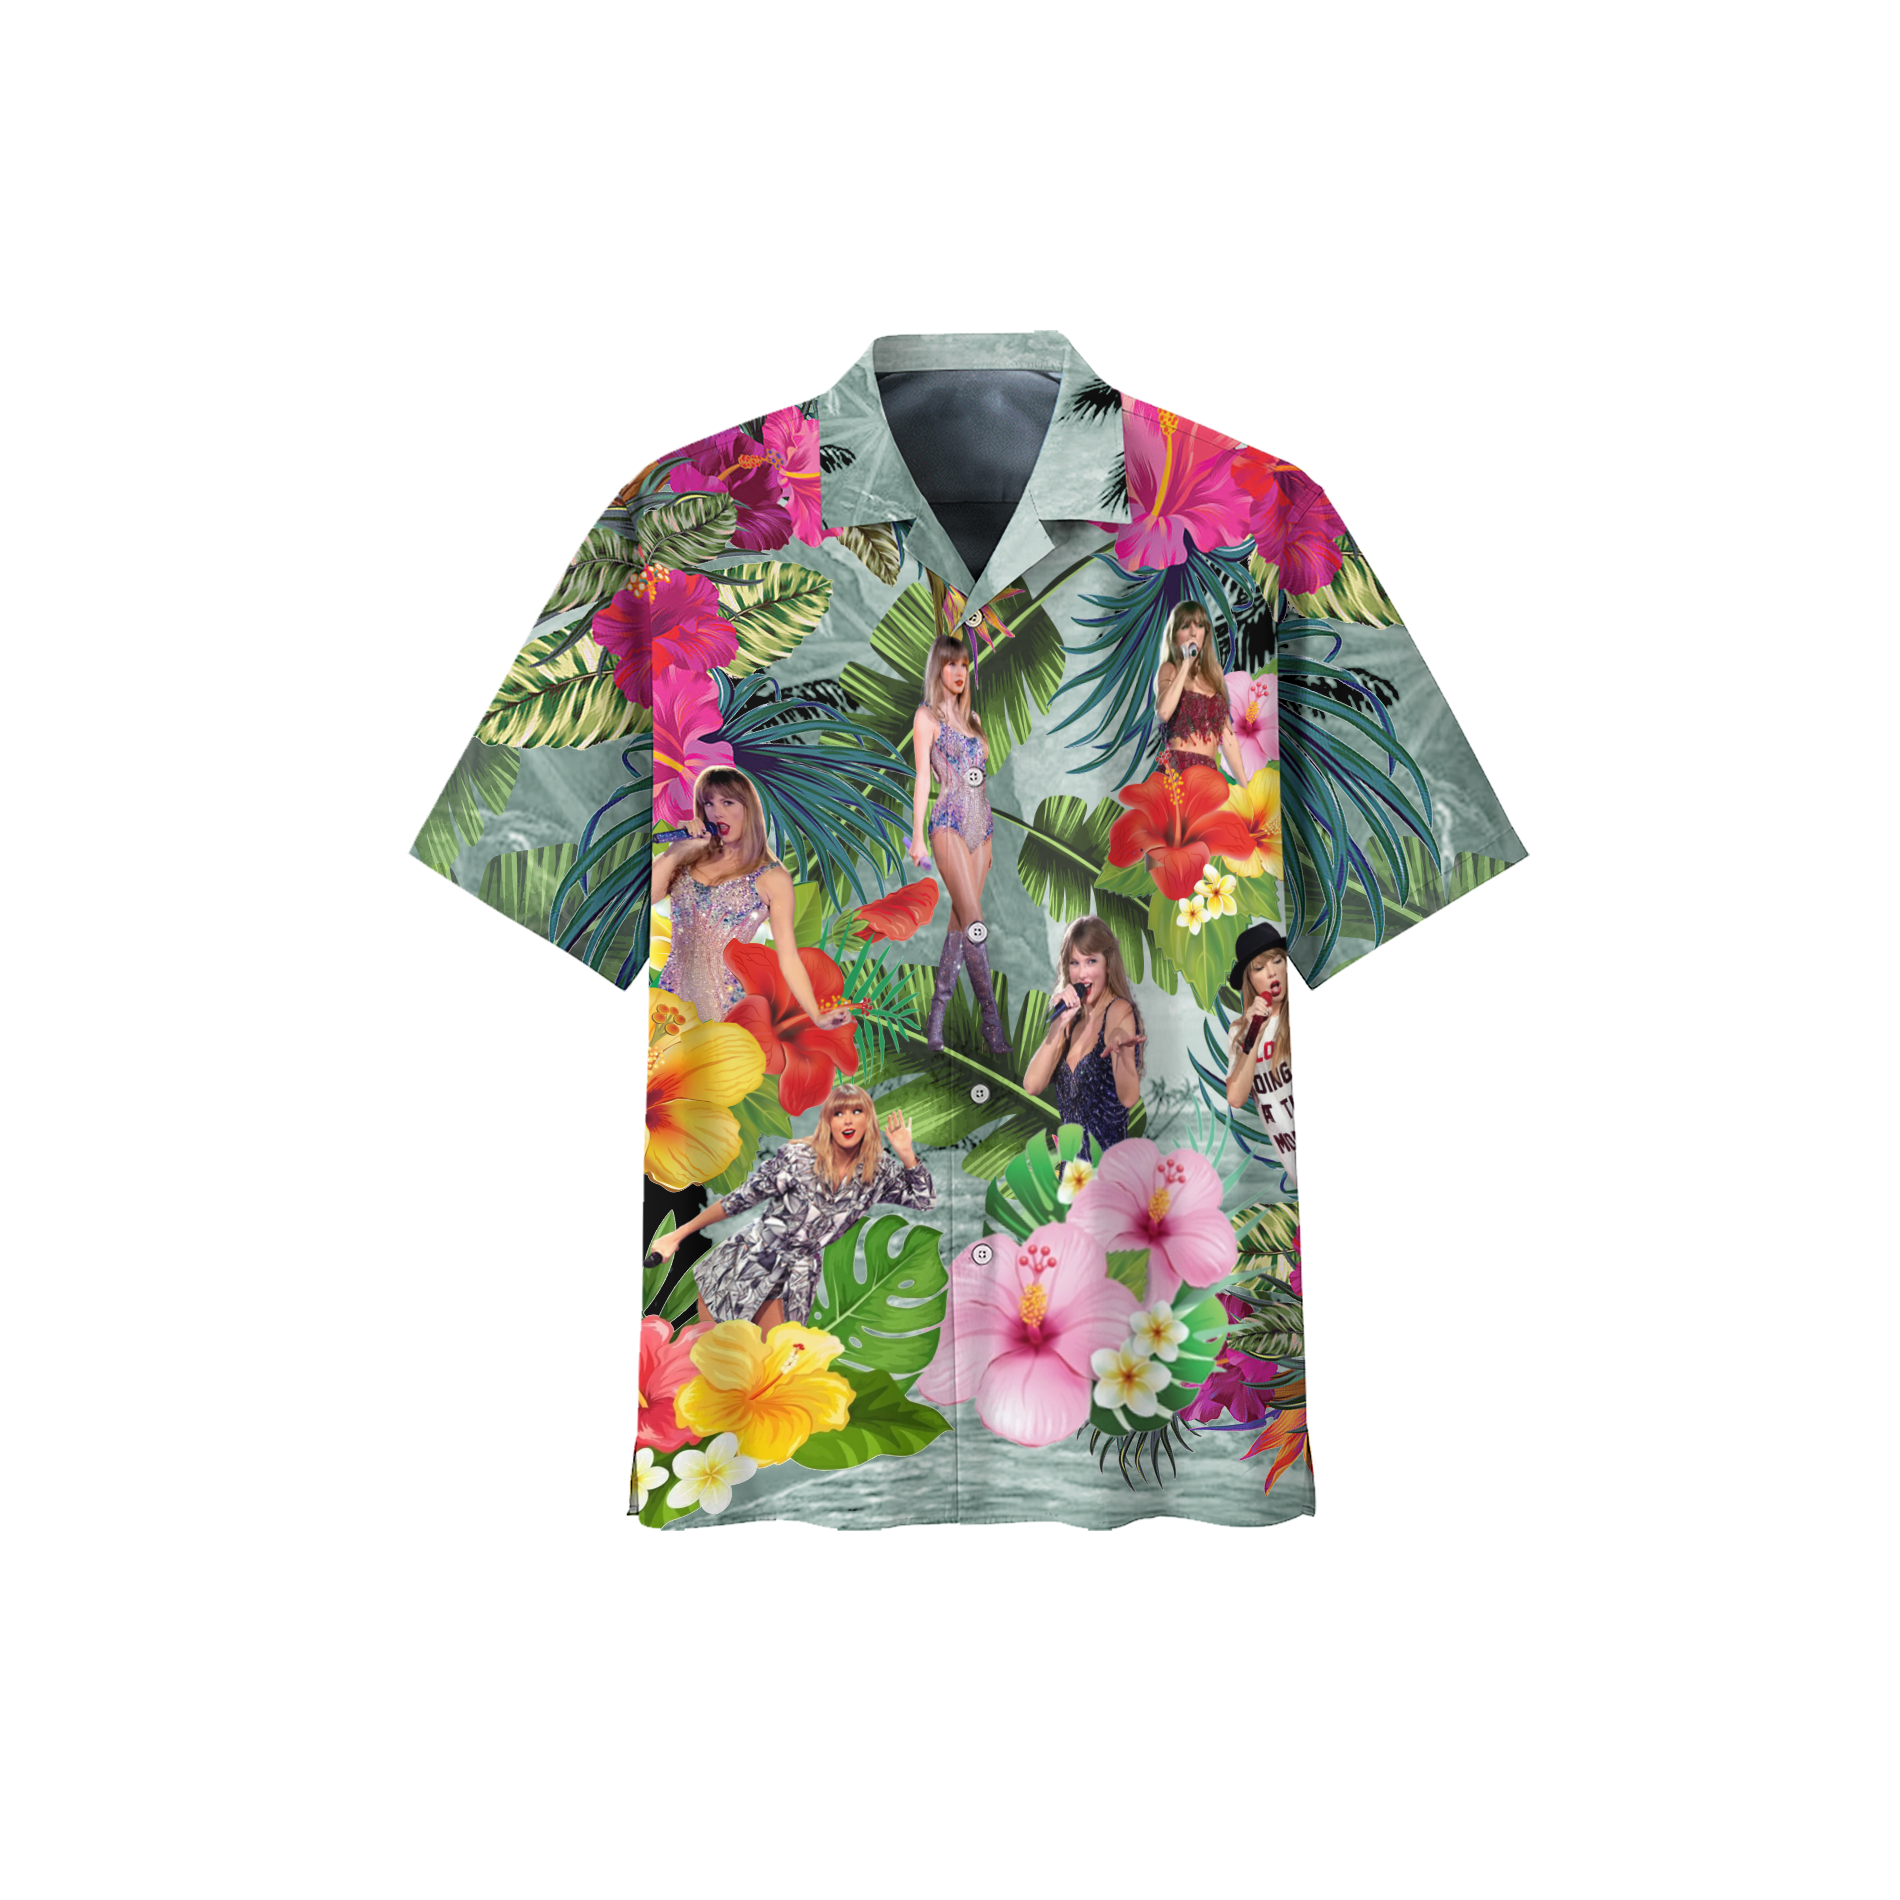 taylor swift tropical hawaiian shirt 3938 dIEfr